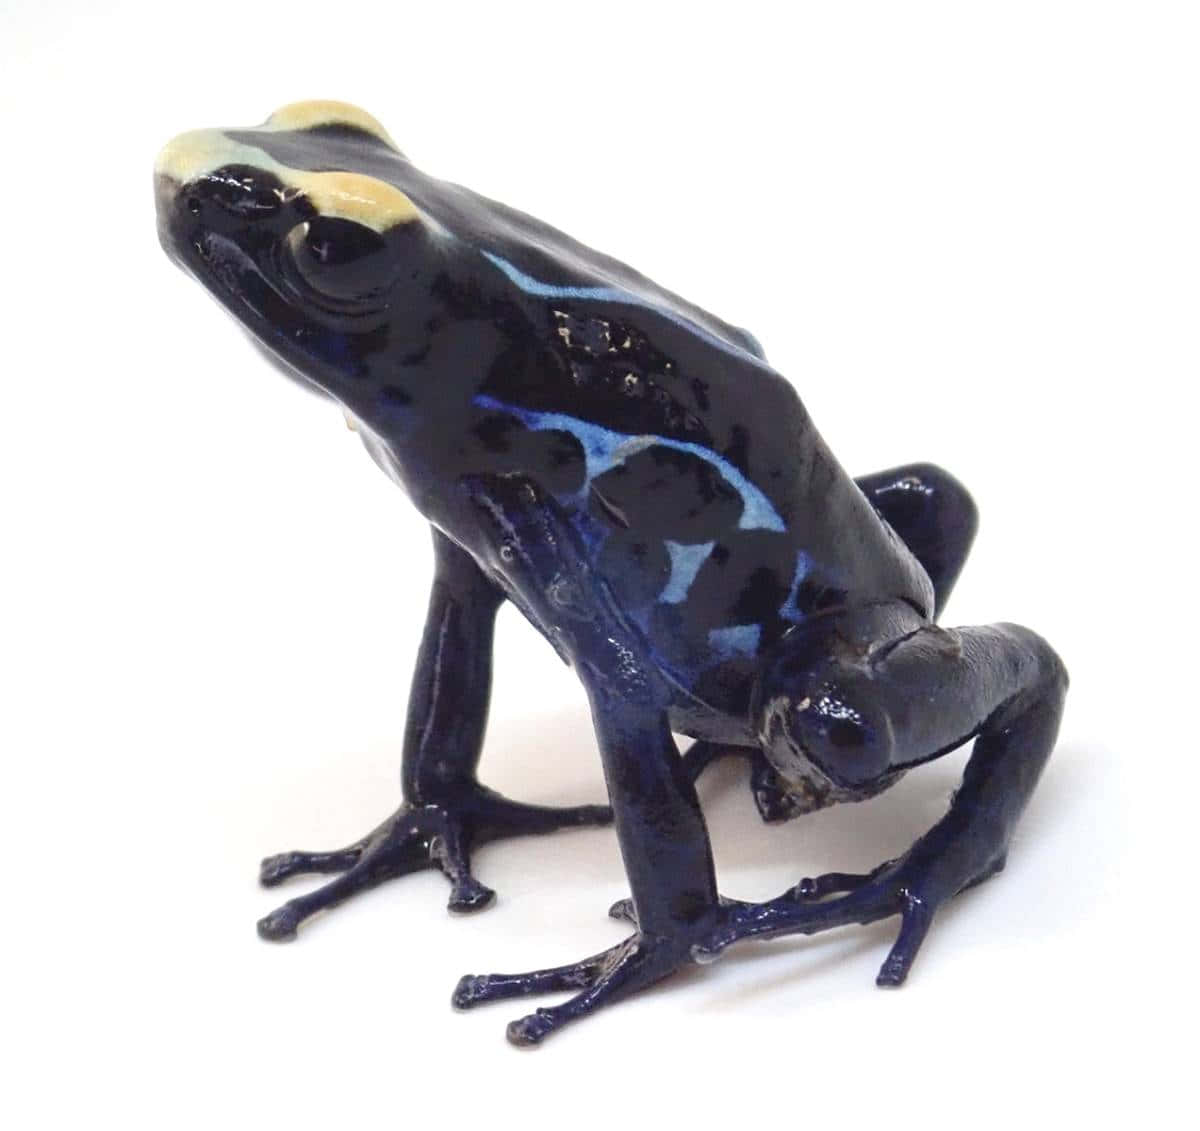 Glossy Black True Frog Side View Wallpaper